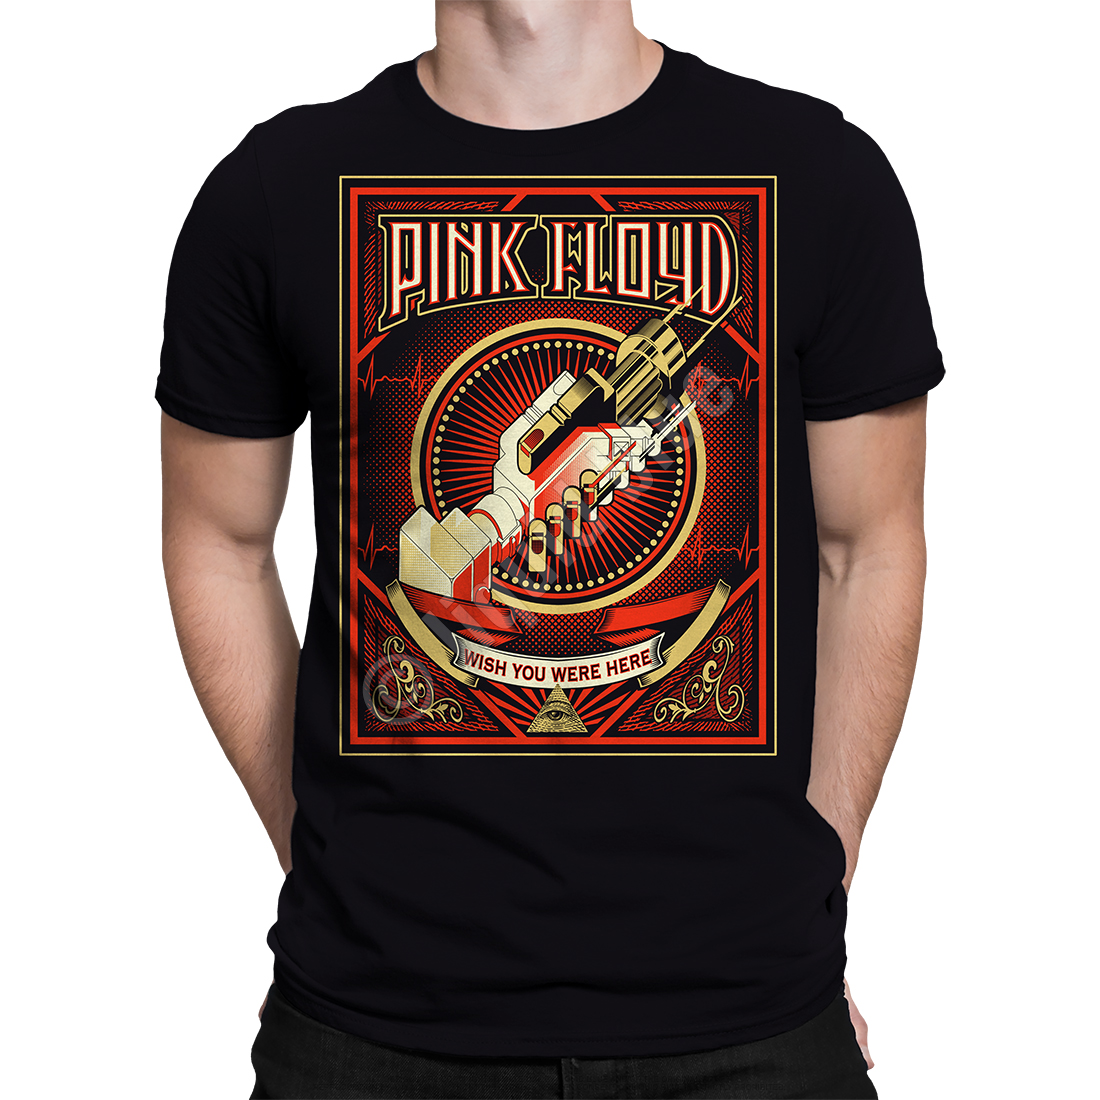 Tee You Liquid Pink Wish Here Black Were Blue Floyd T-Shirt